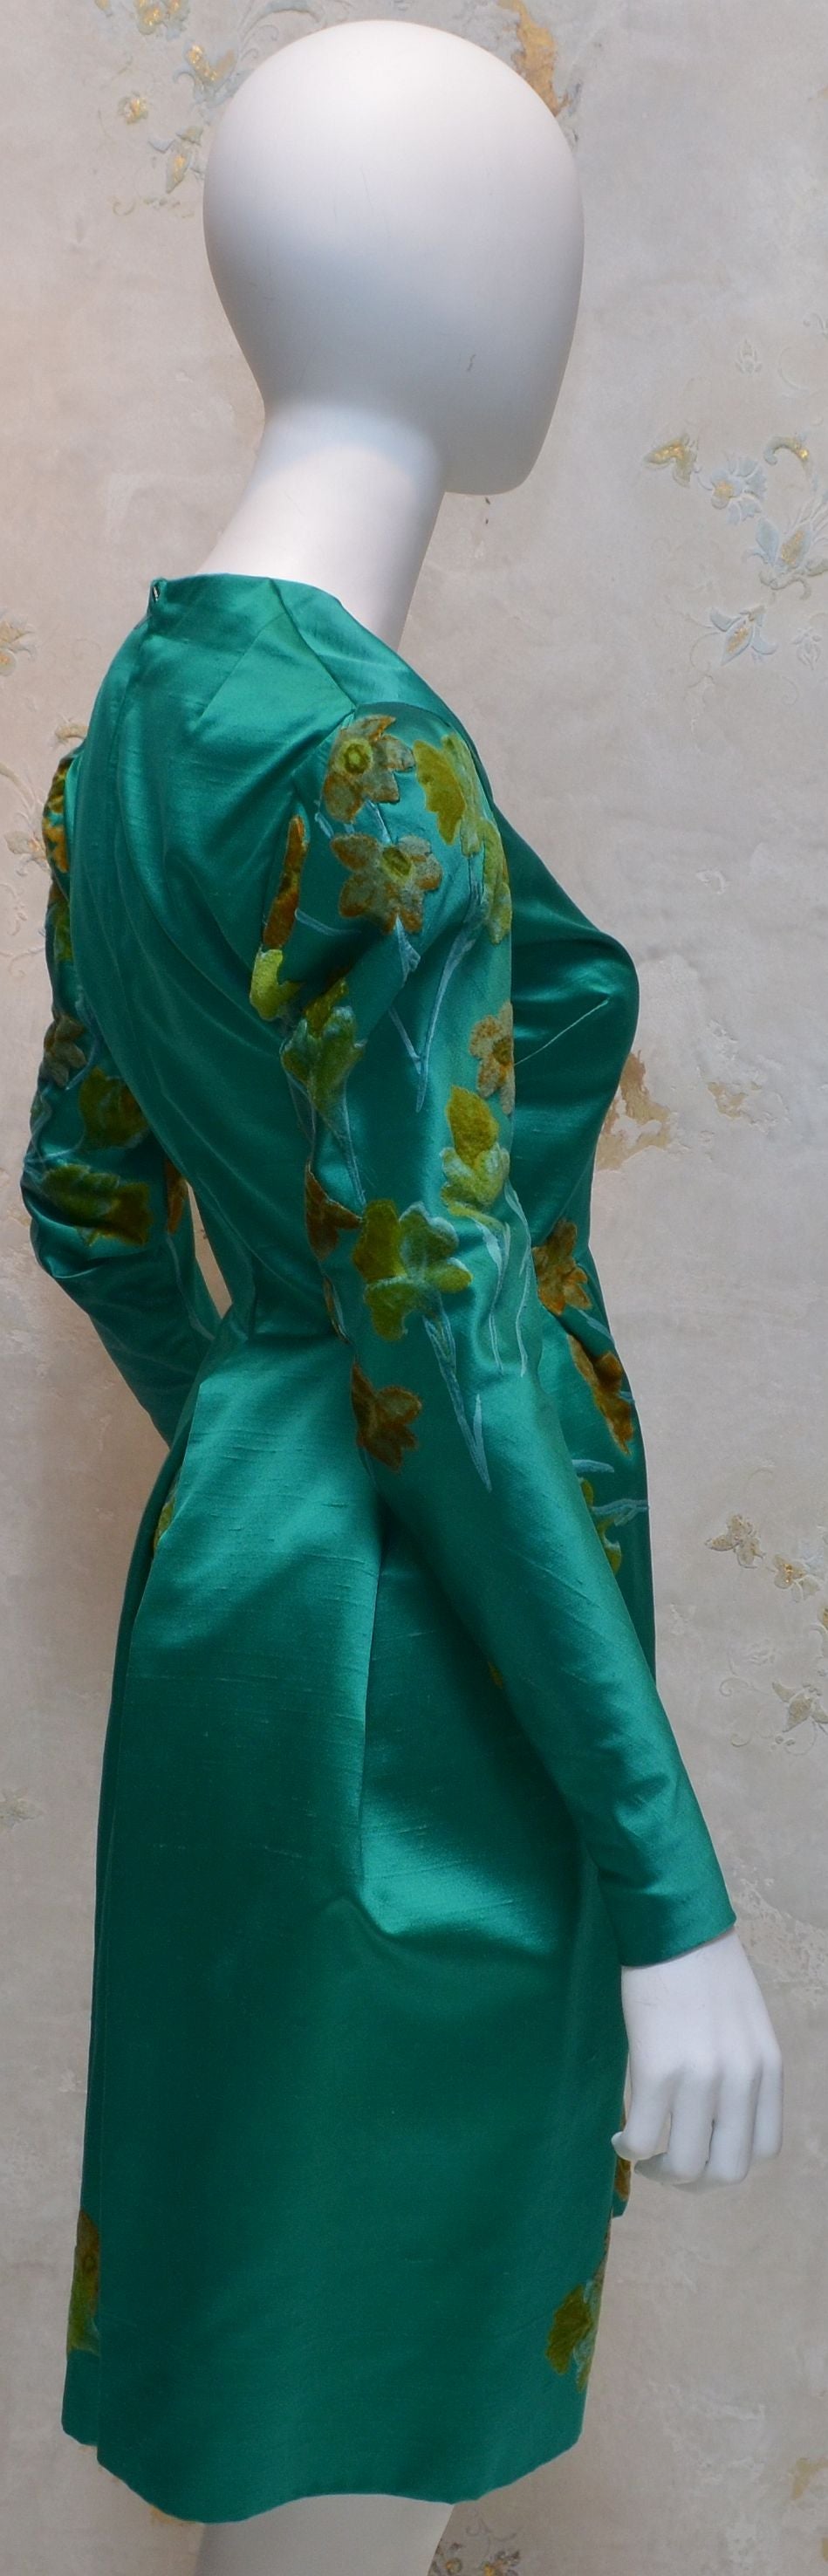 1960's Nettie Rosenstein New York Emerald Green Floral Dress For Sale ...